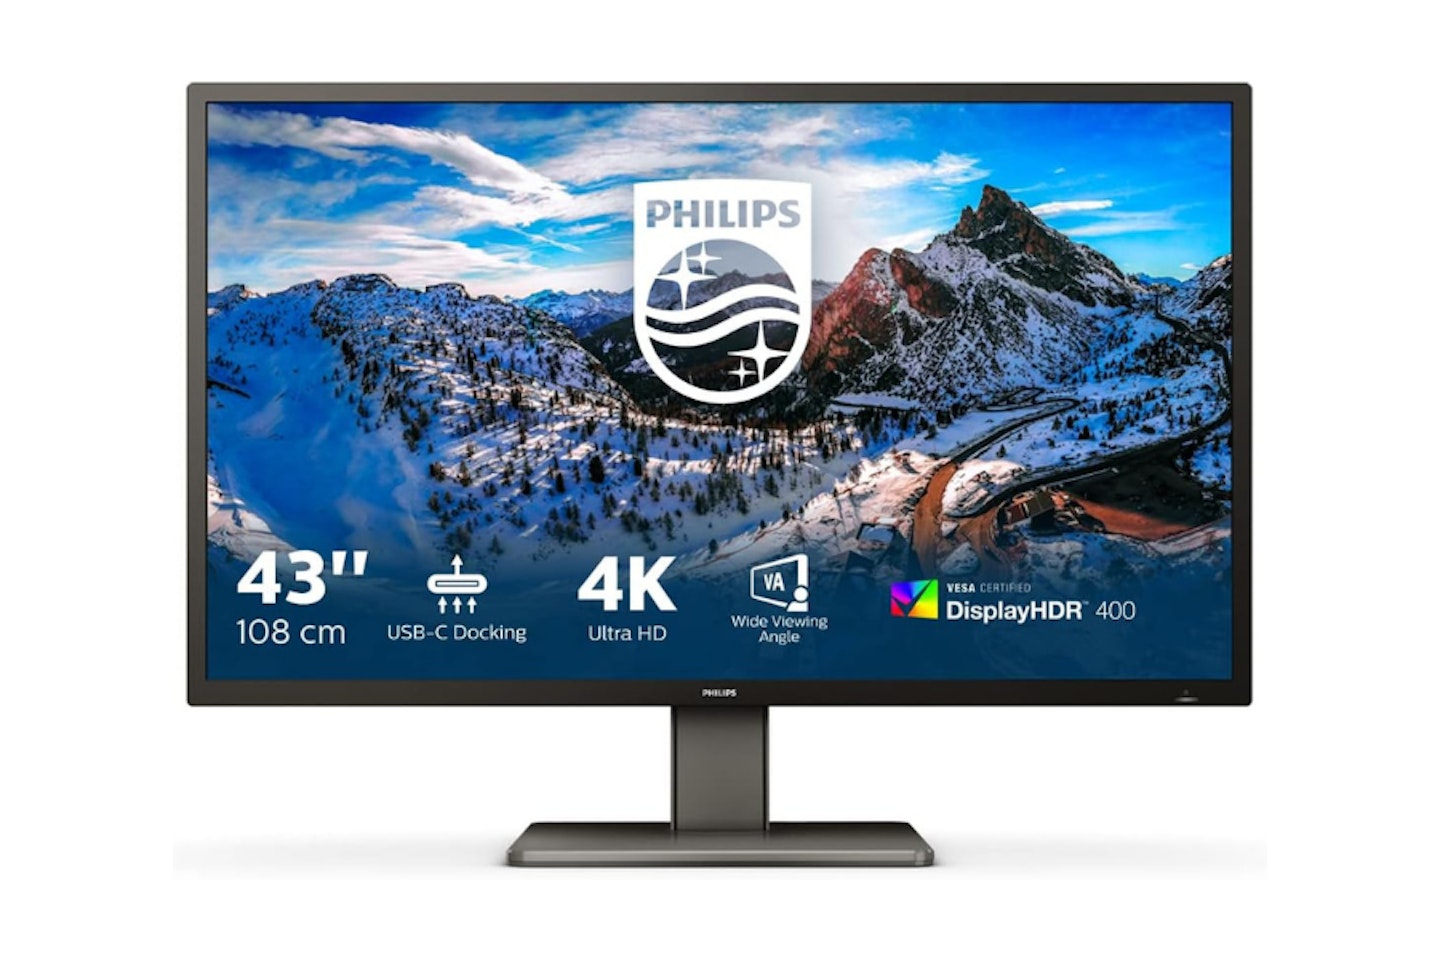 PHILIPS 439P1-43 Inch 4K UHD Monitor